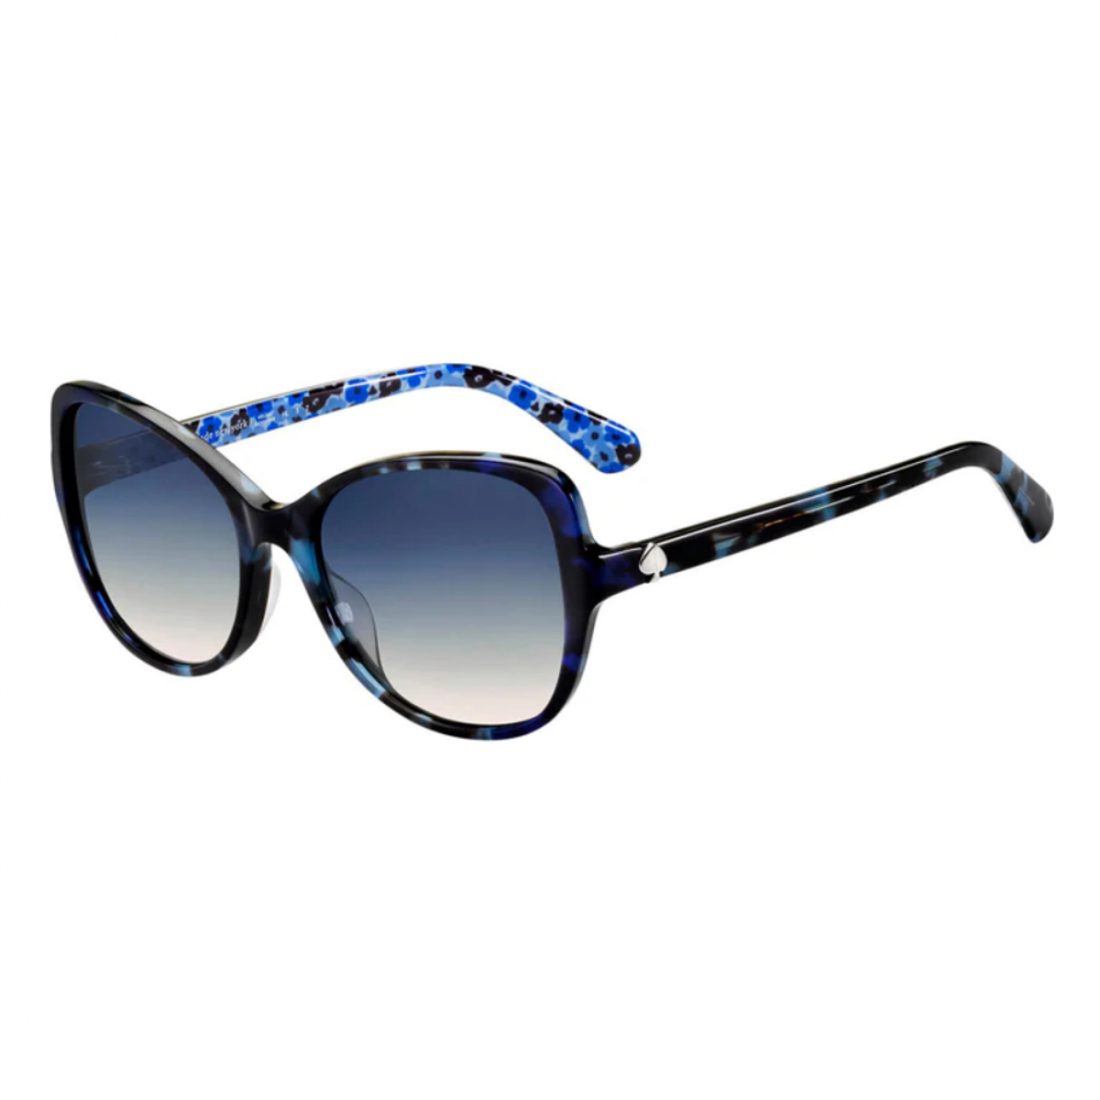 Women's 'ESMAE/G/S 0XP8' Sunglasses